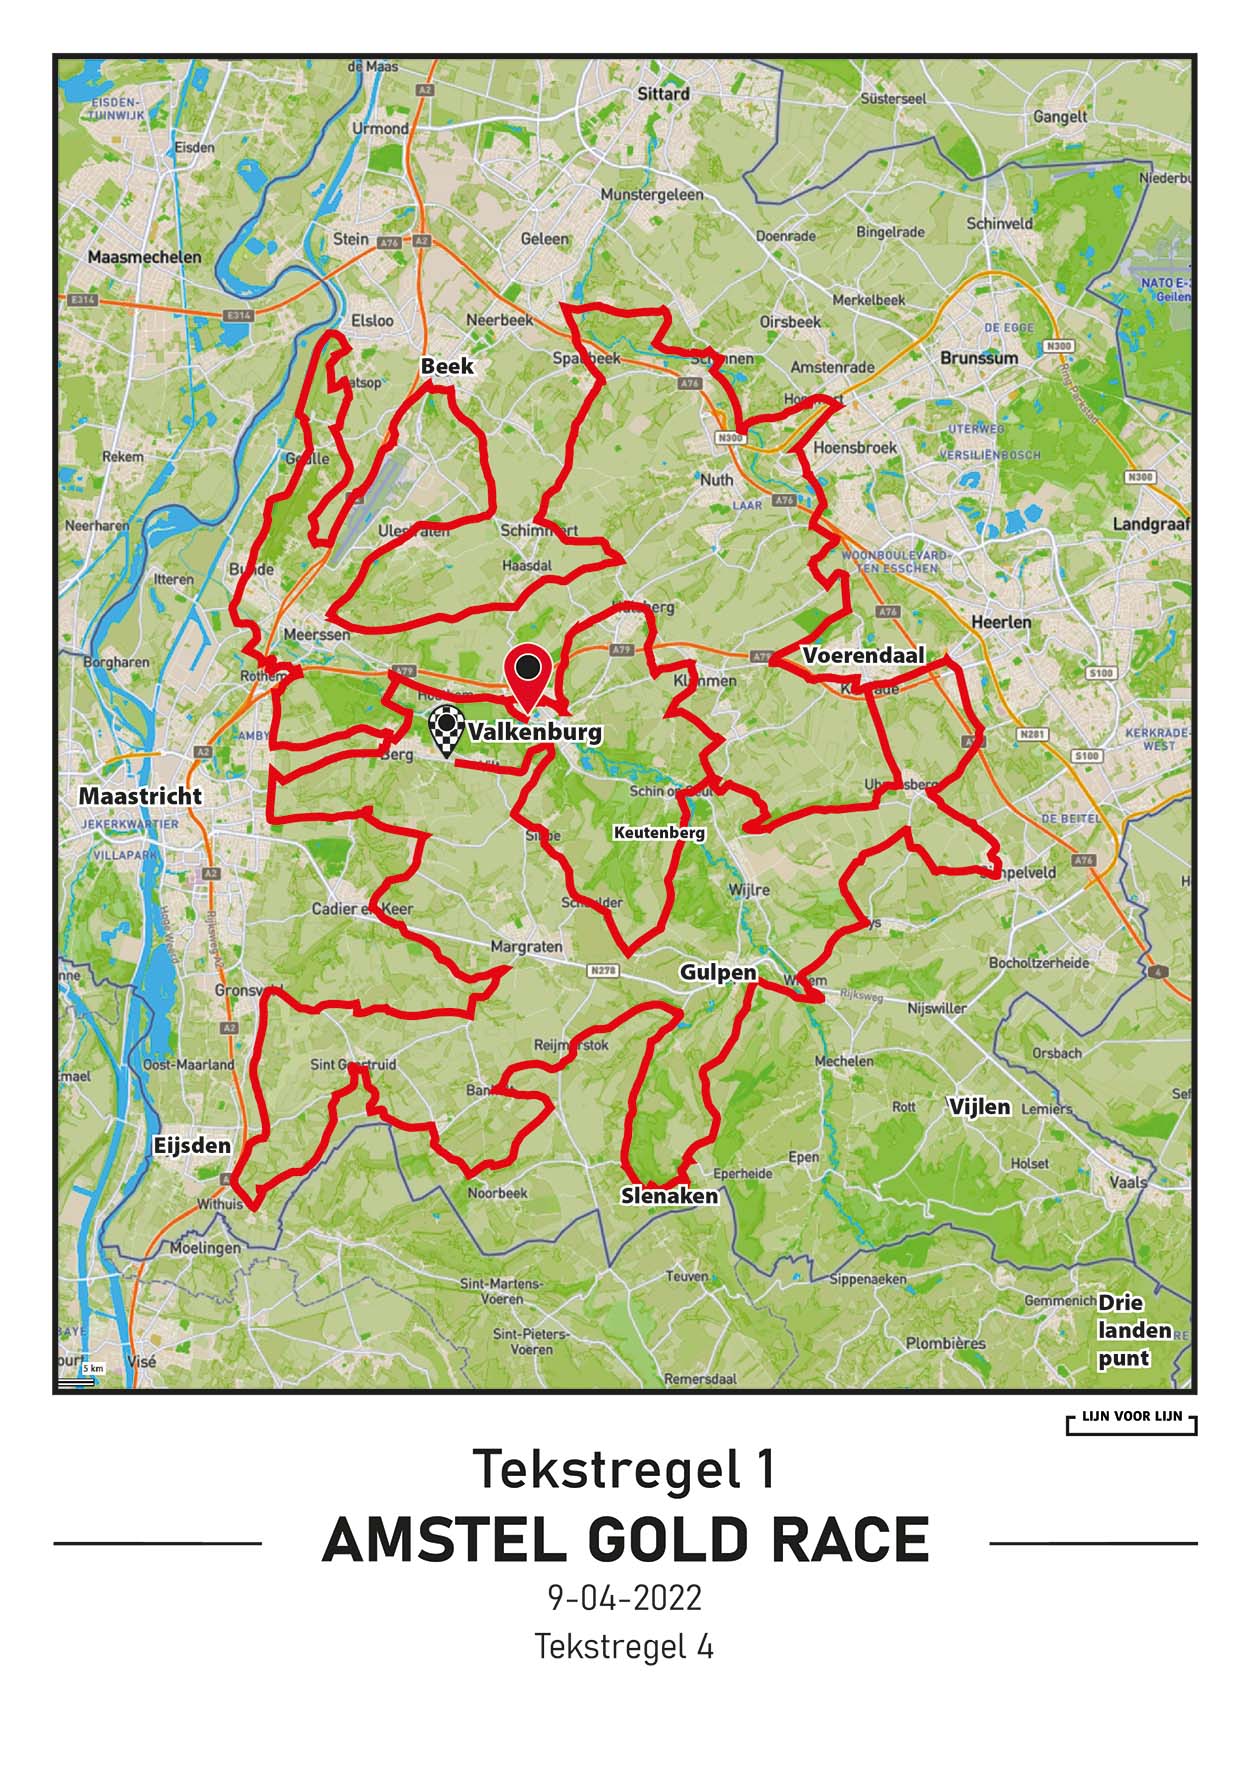 Amstel Gold Race 200km, 2022